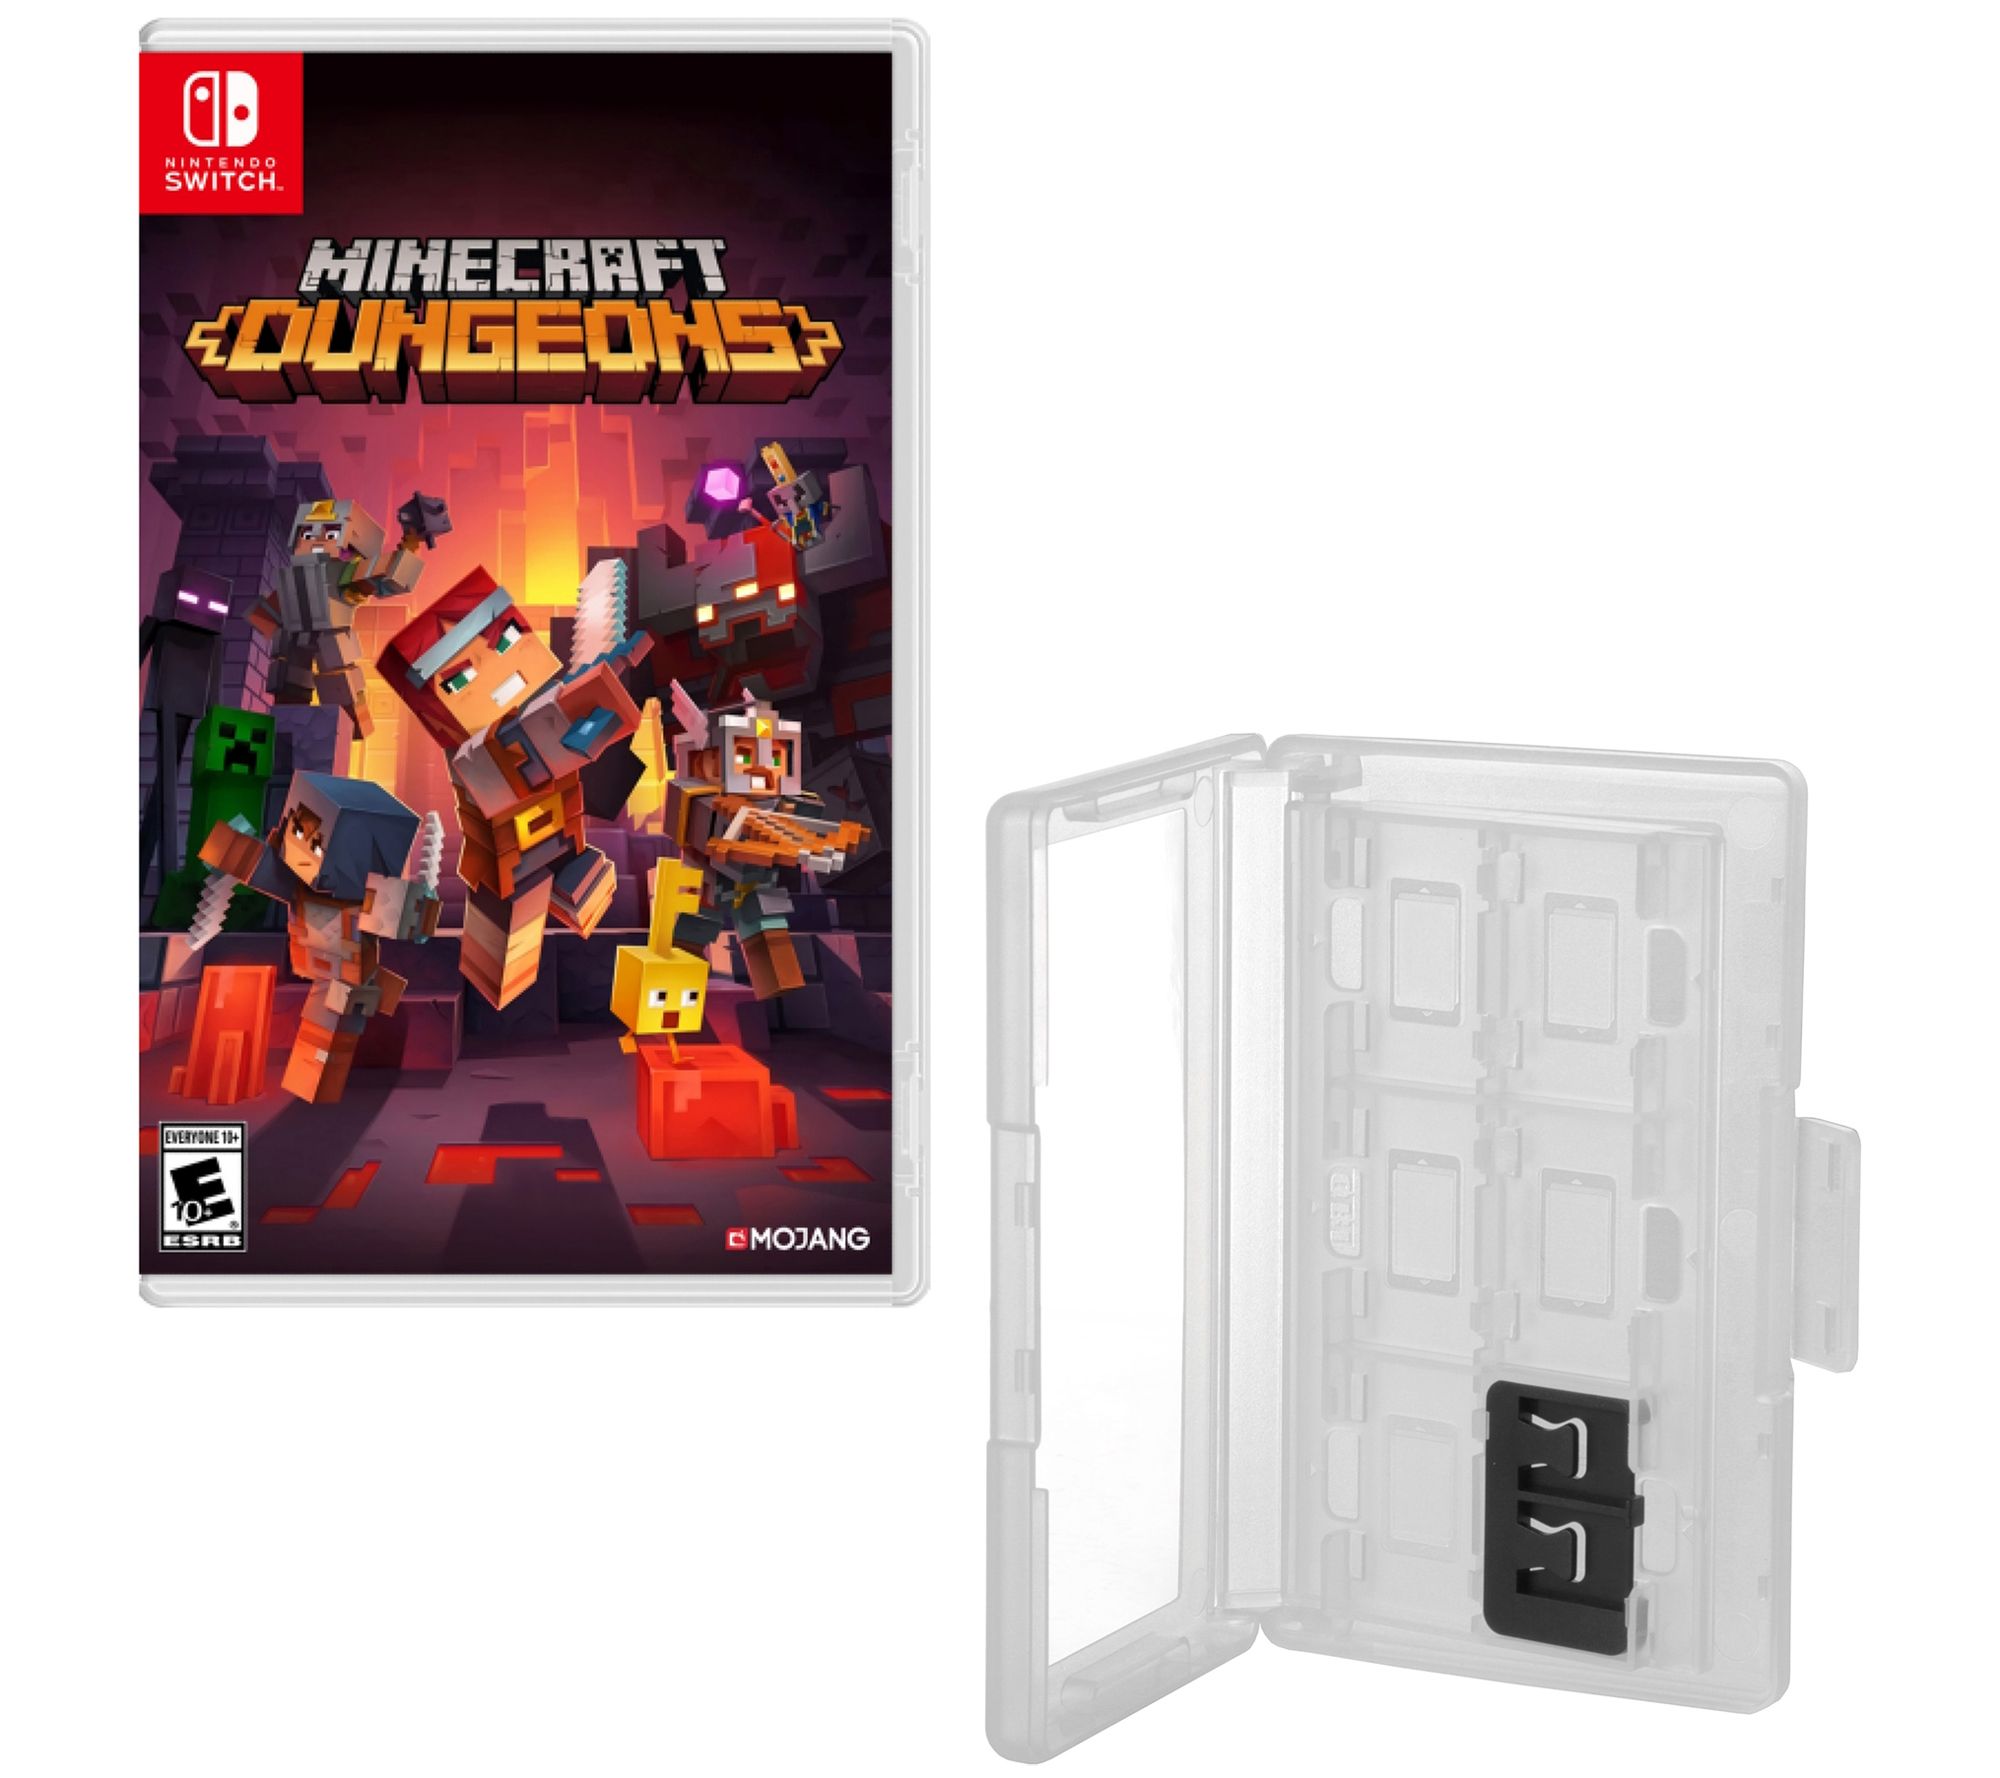 Майнкрафт данженс на Нинтендо свитч. Игра для Nintendo Switch Minecraft Dungeons Ultimate Edition. Майнкрафт данженс на Нинтендо свитч картридж. Игра Minecraft Dungeons на Nintendo Switch Лайт карта. Dungeons nintendo switch